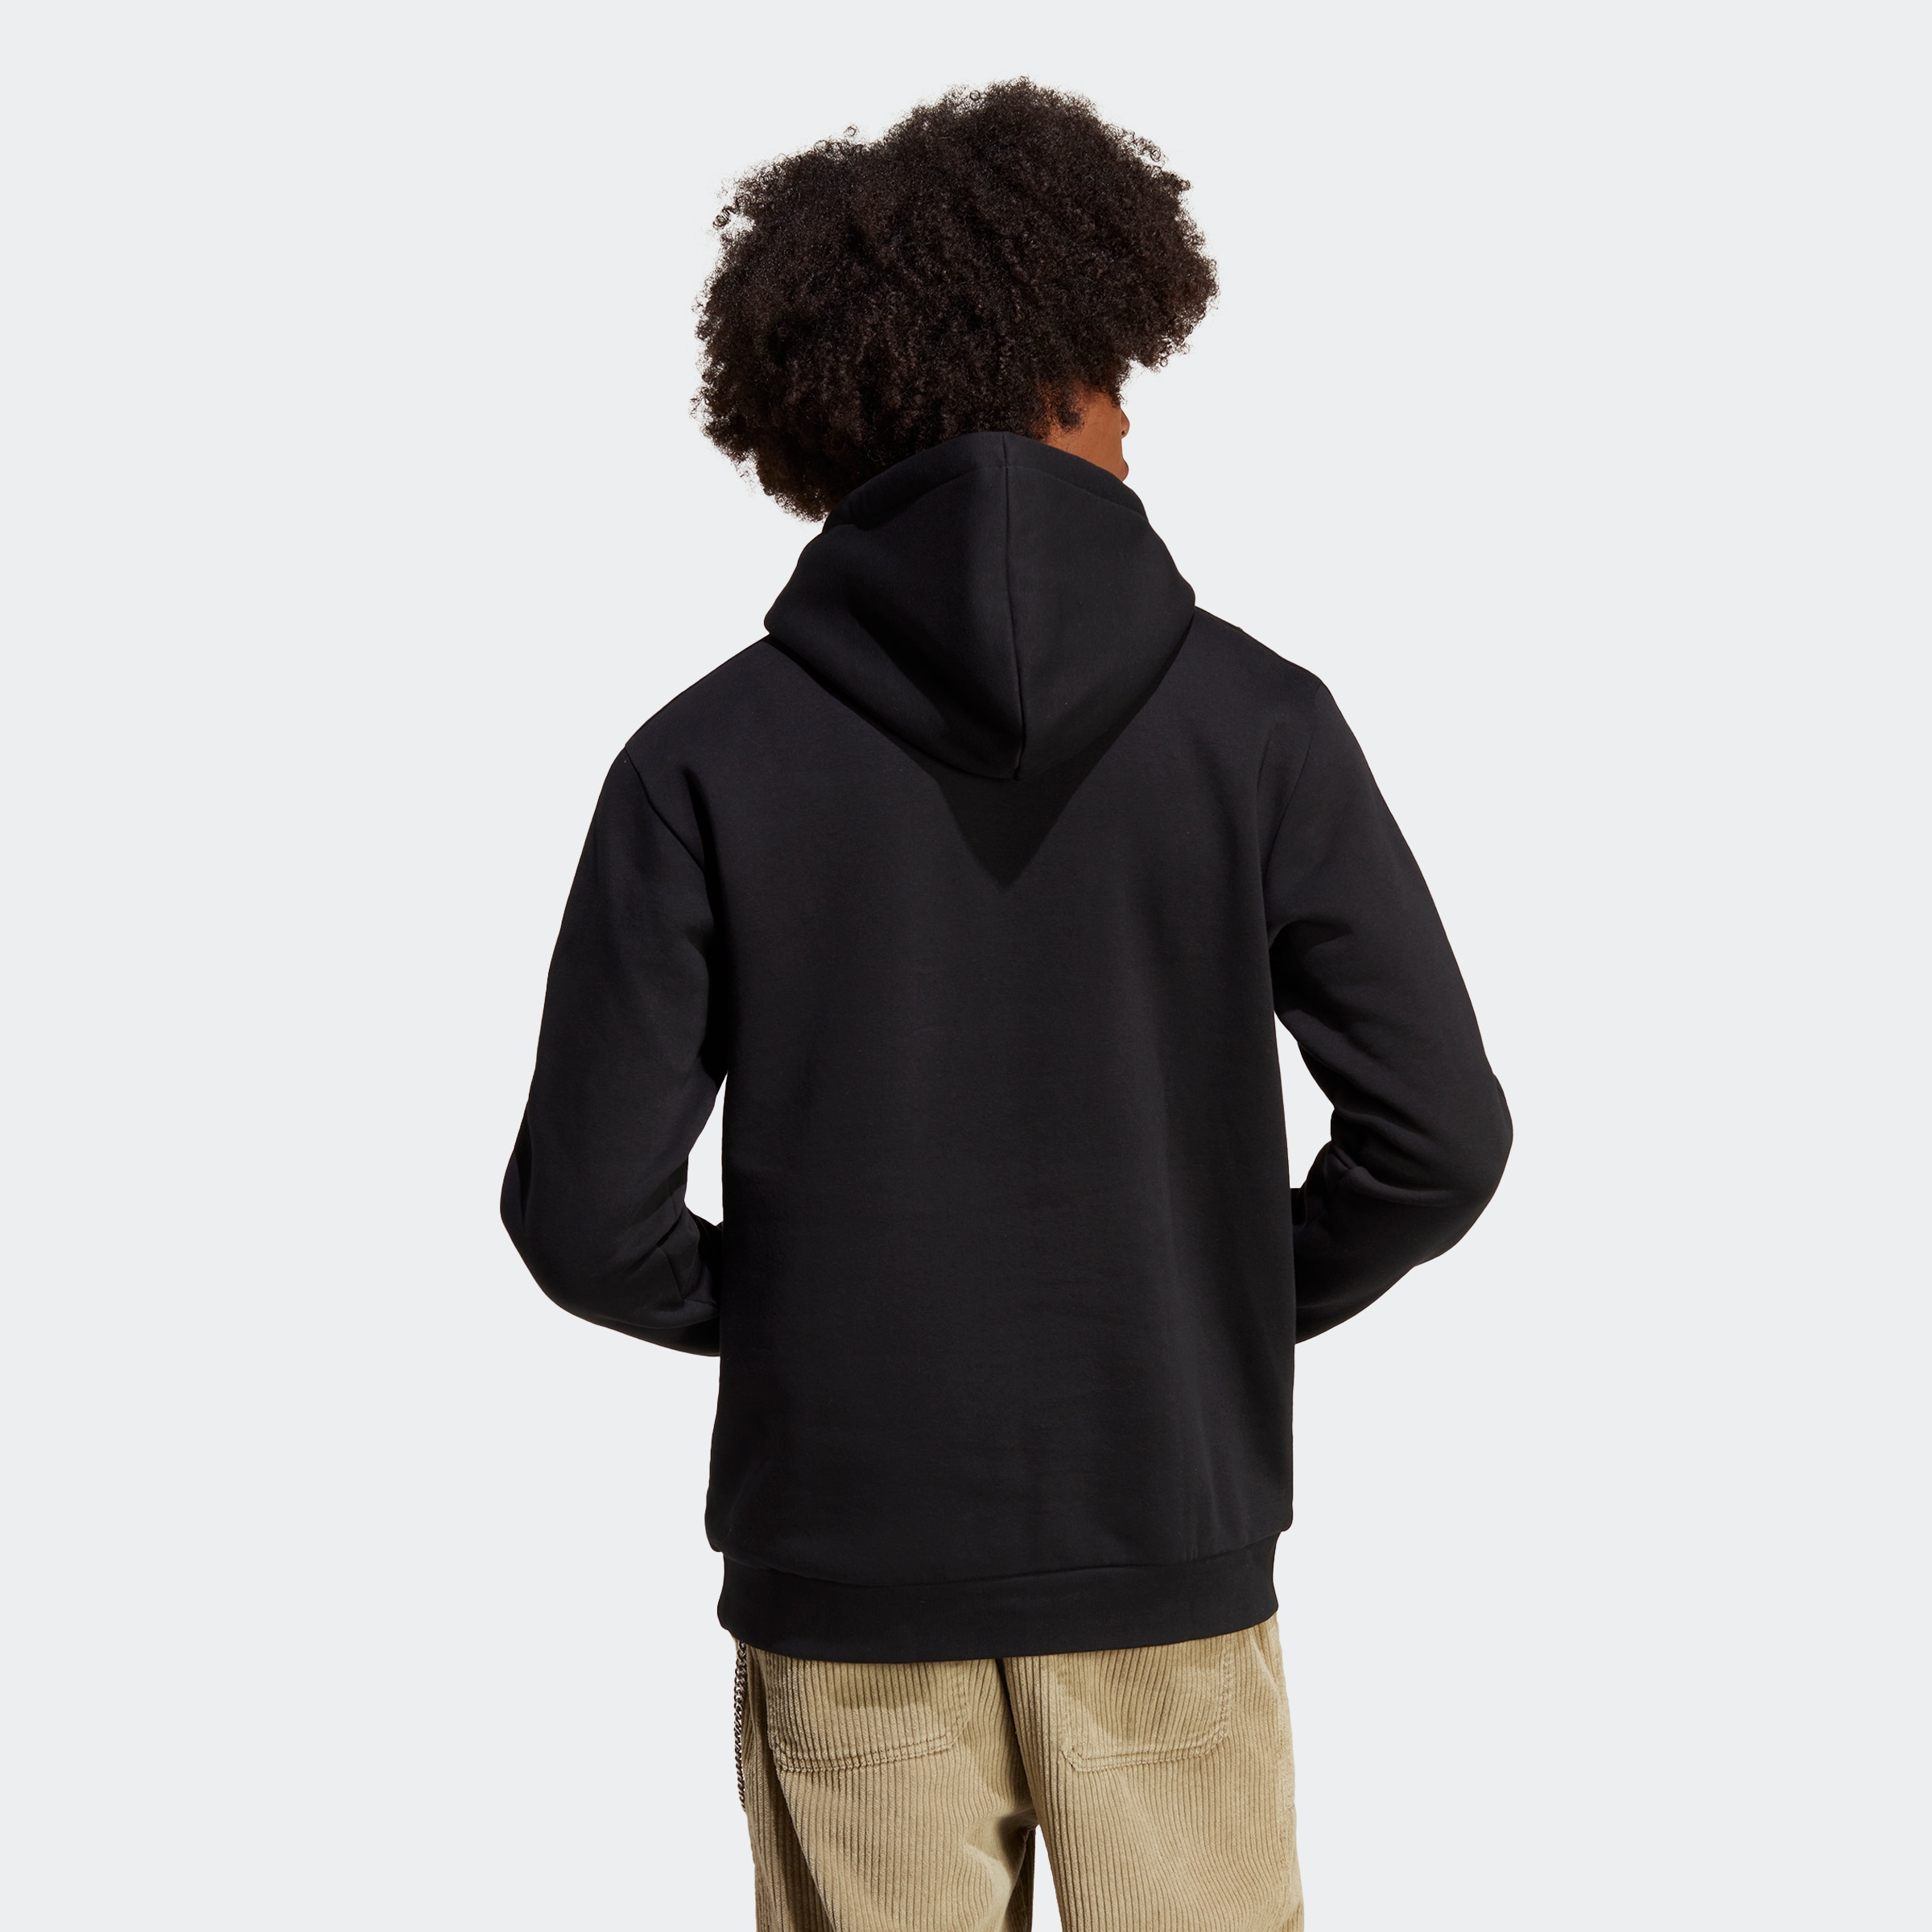 INFILL »GRAPHICS Originals OTTO CAMO HOODIE« kaufen bei adidas Sweatshirt